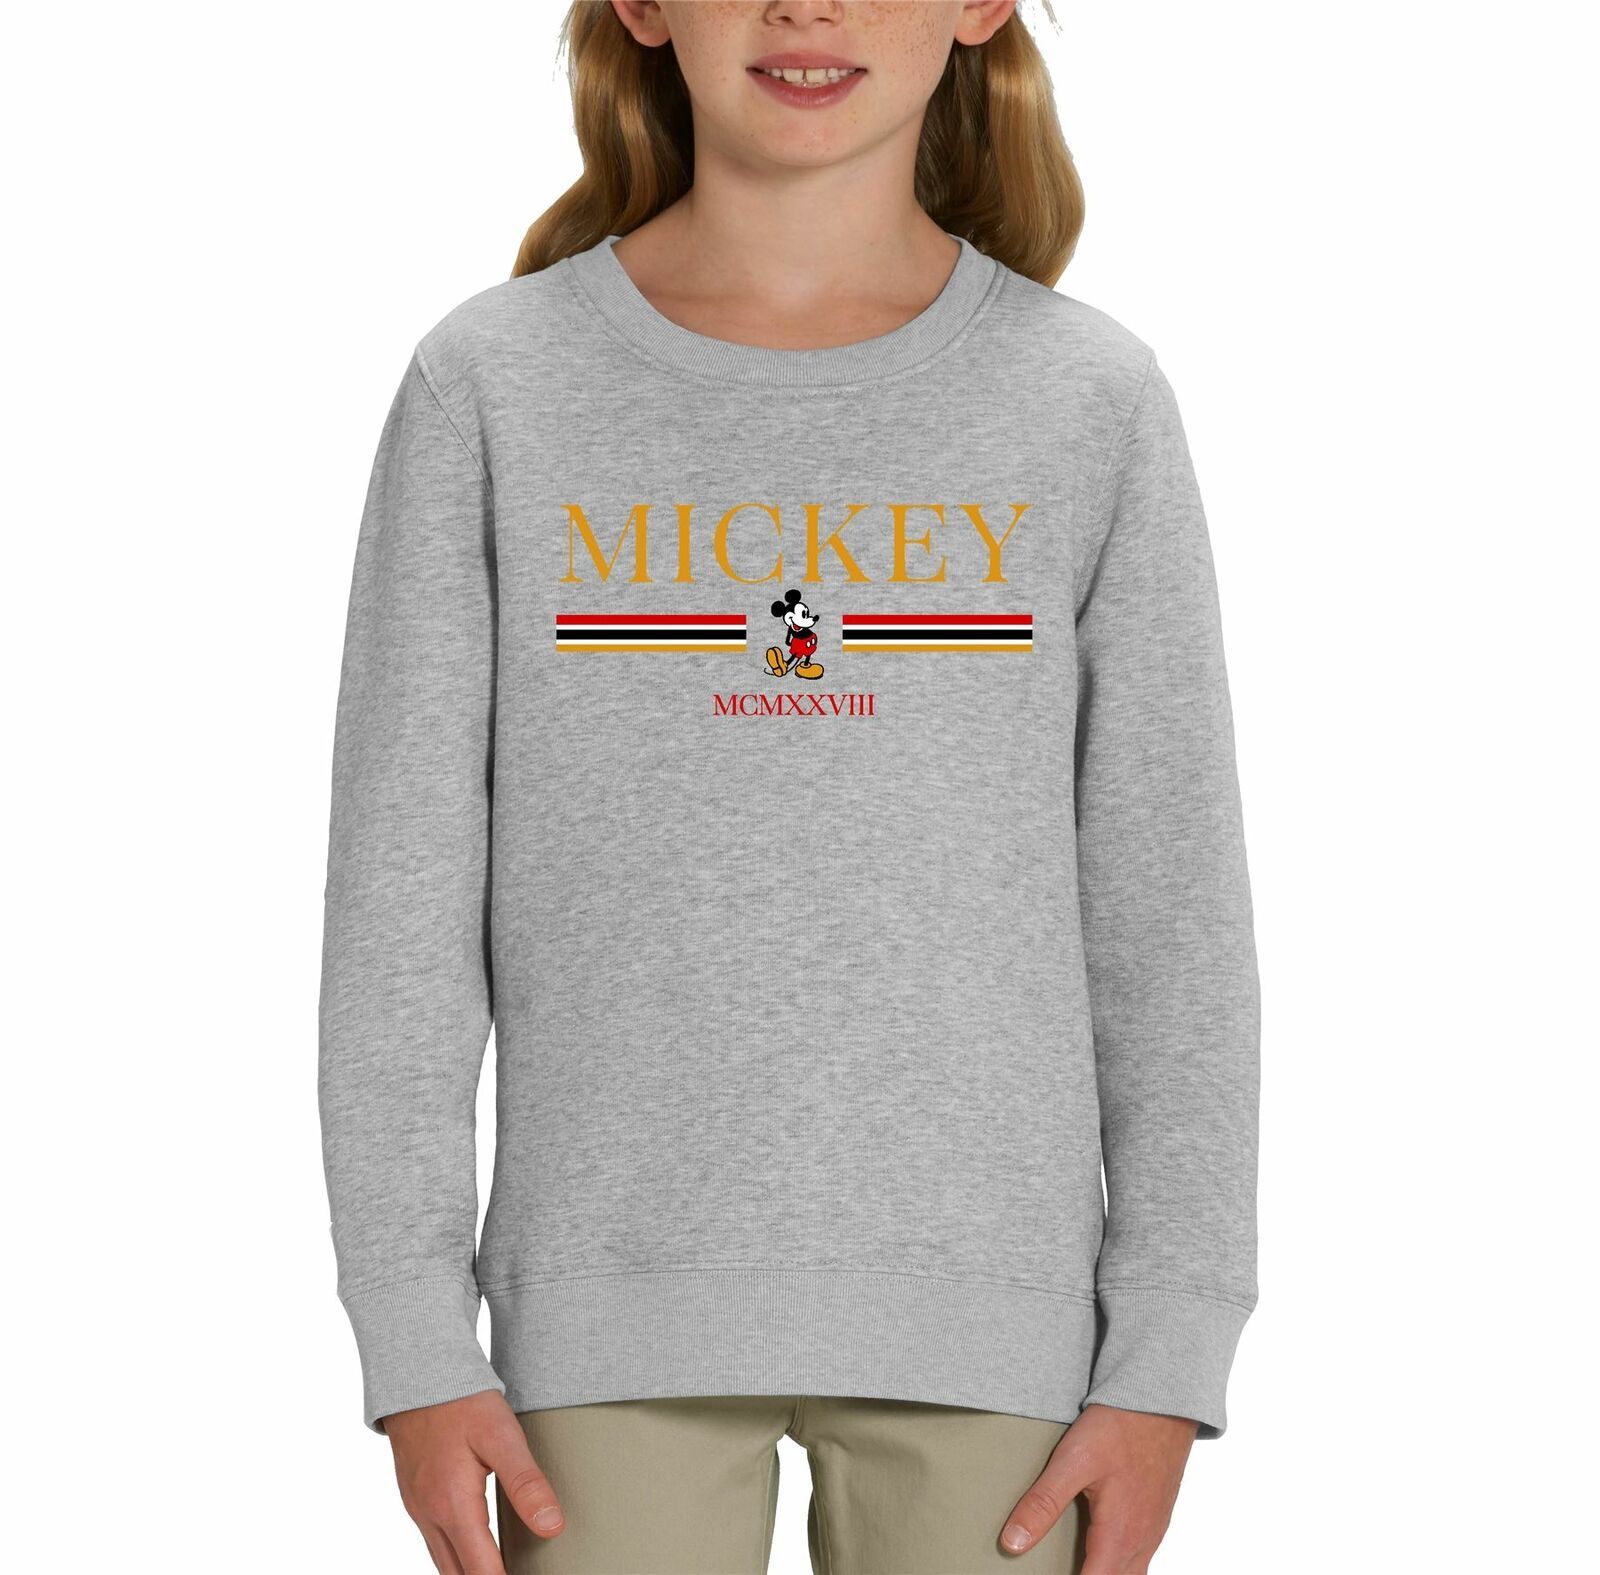 Mickey Mouse 1928 Children's Grey Unisex Sweatshirt - $25.07